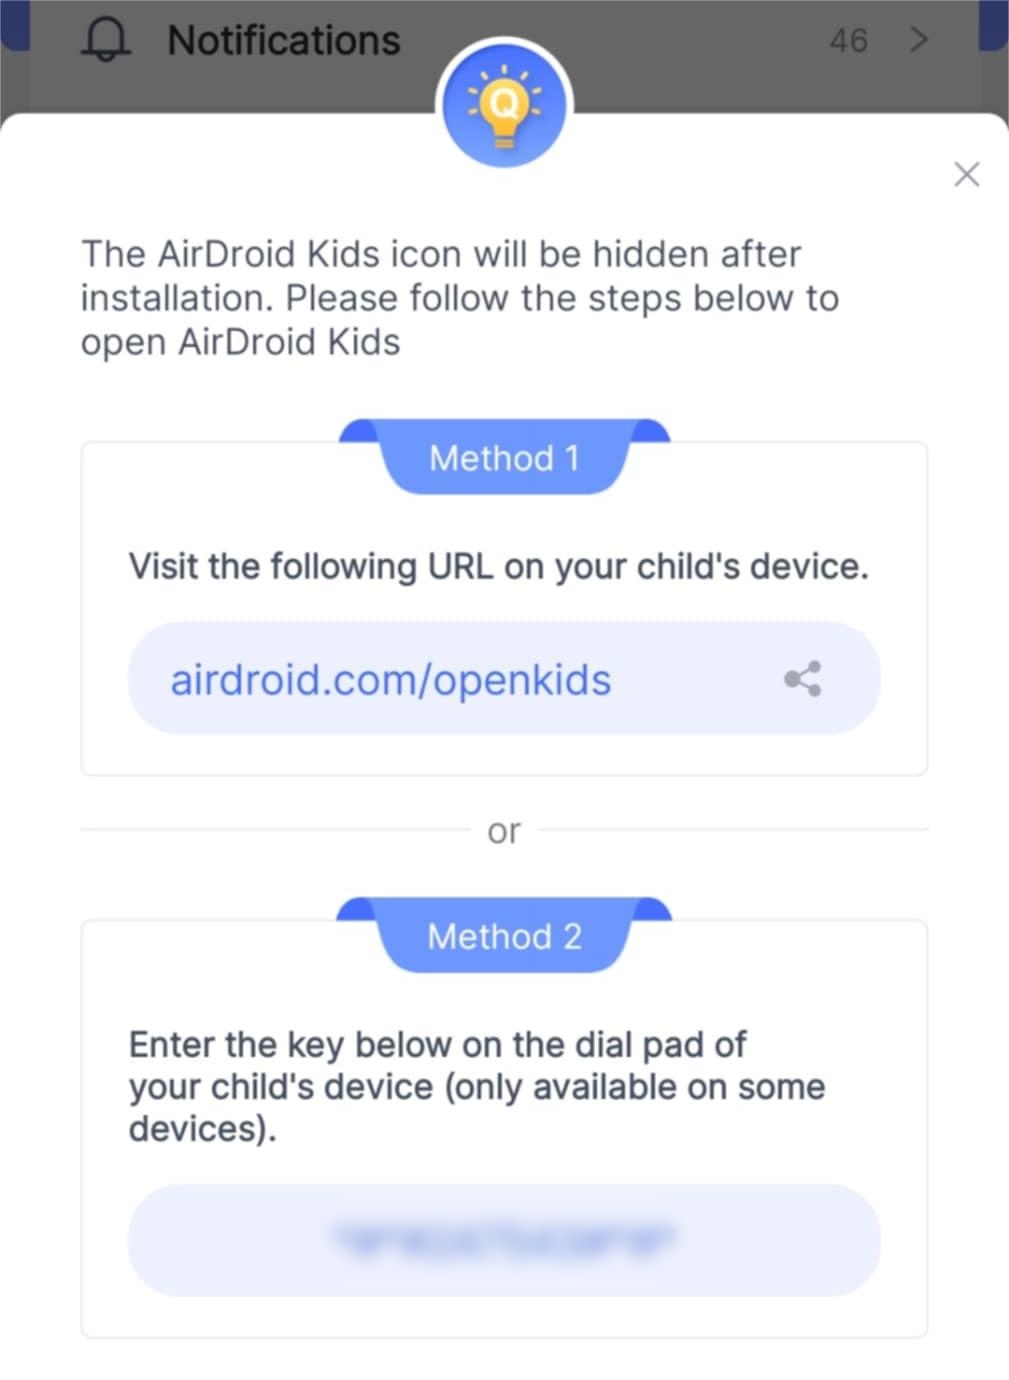 AirDroid Parental Control